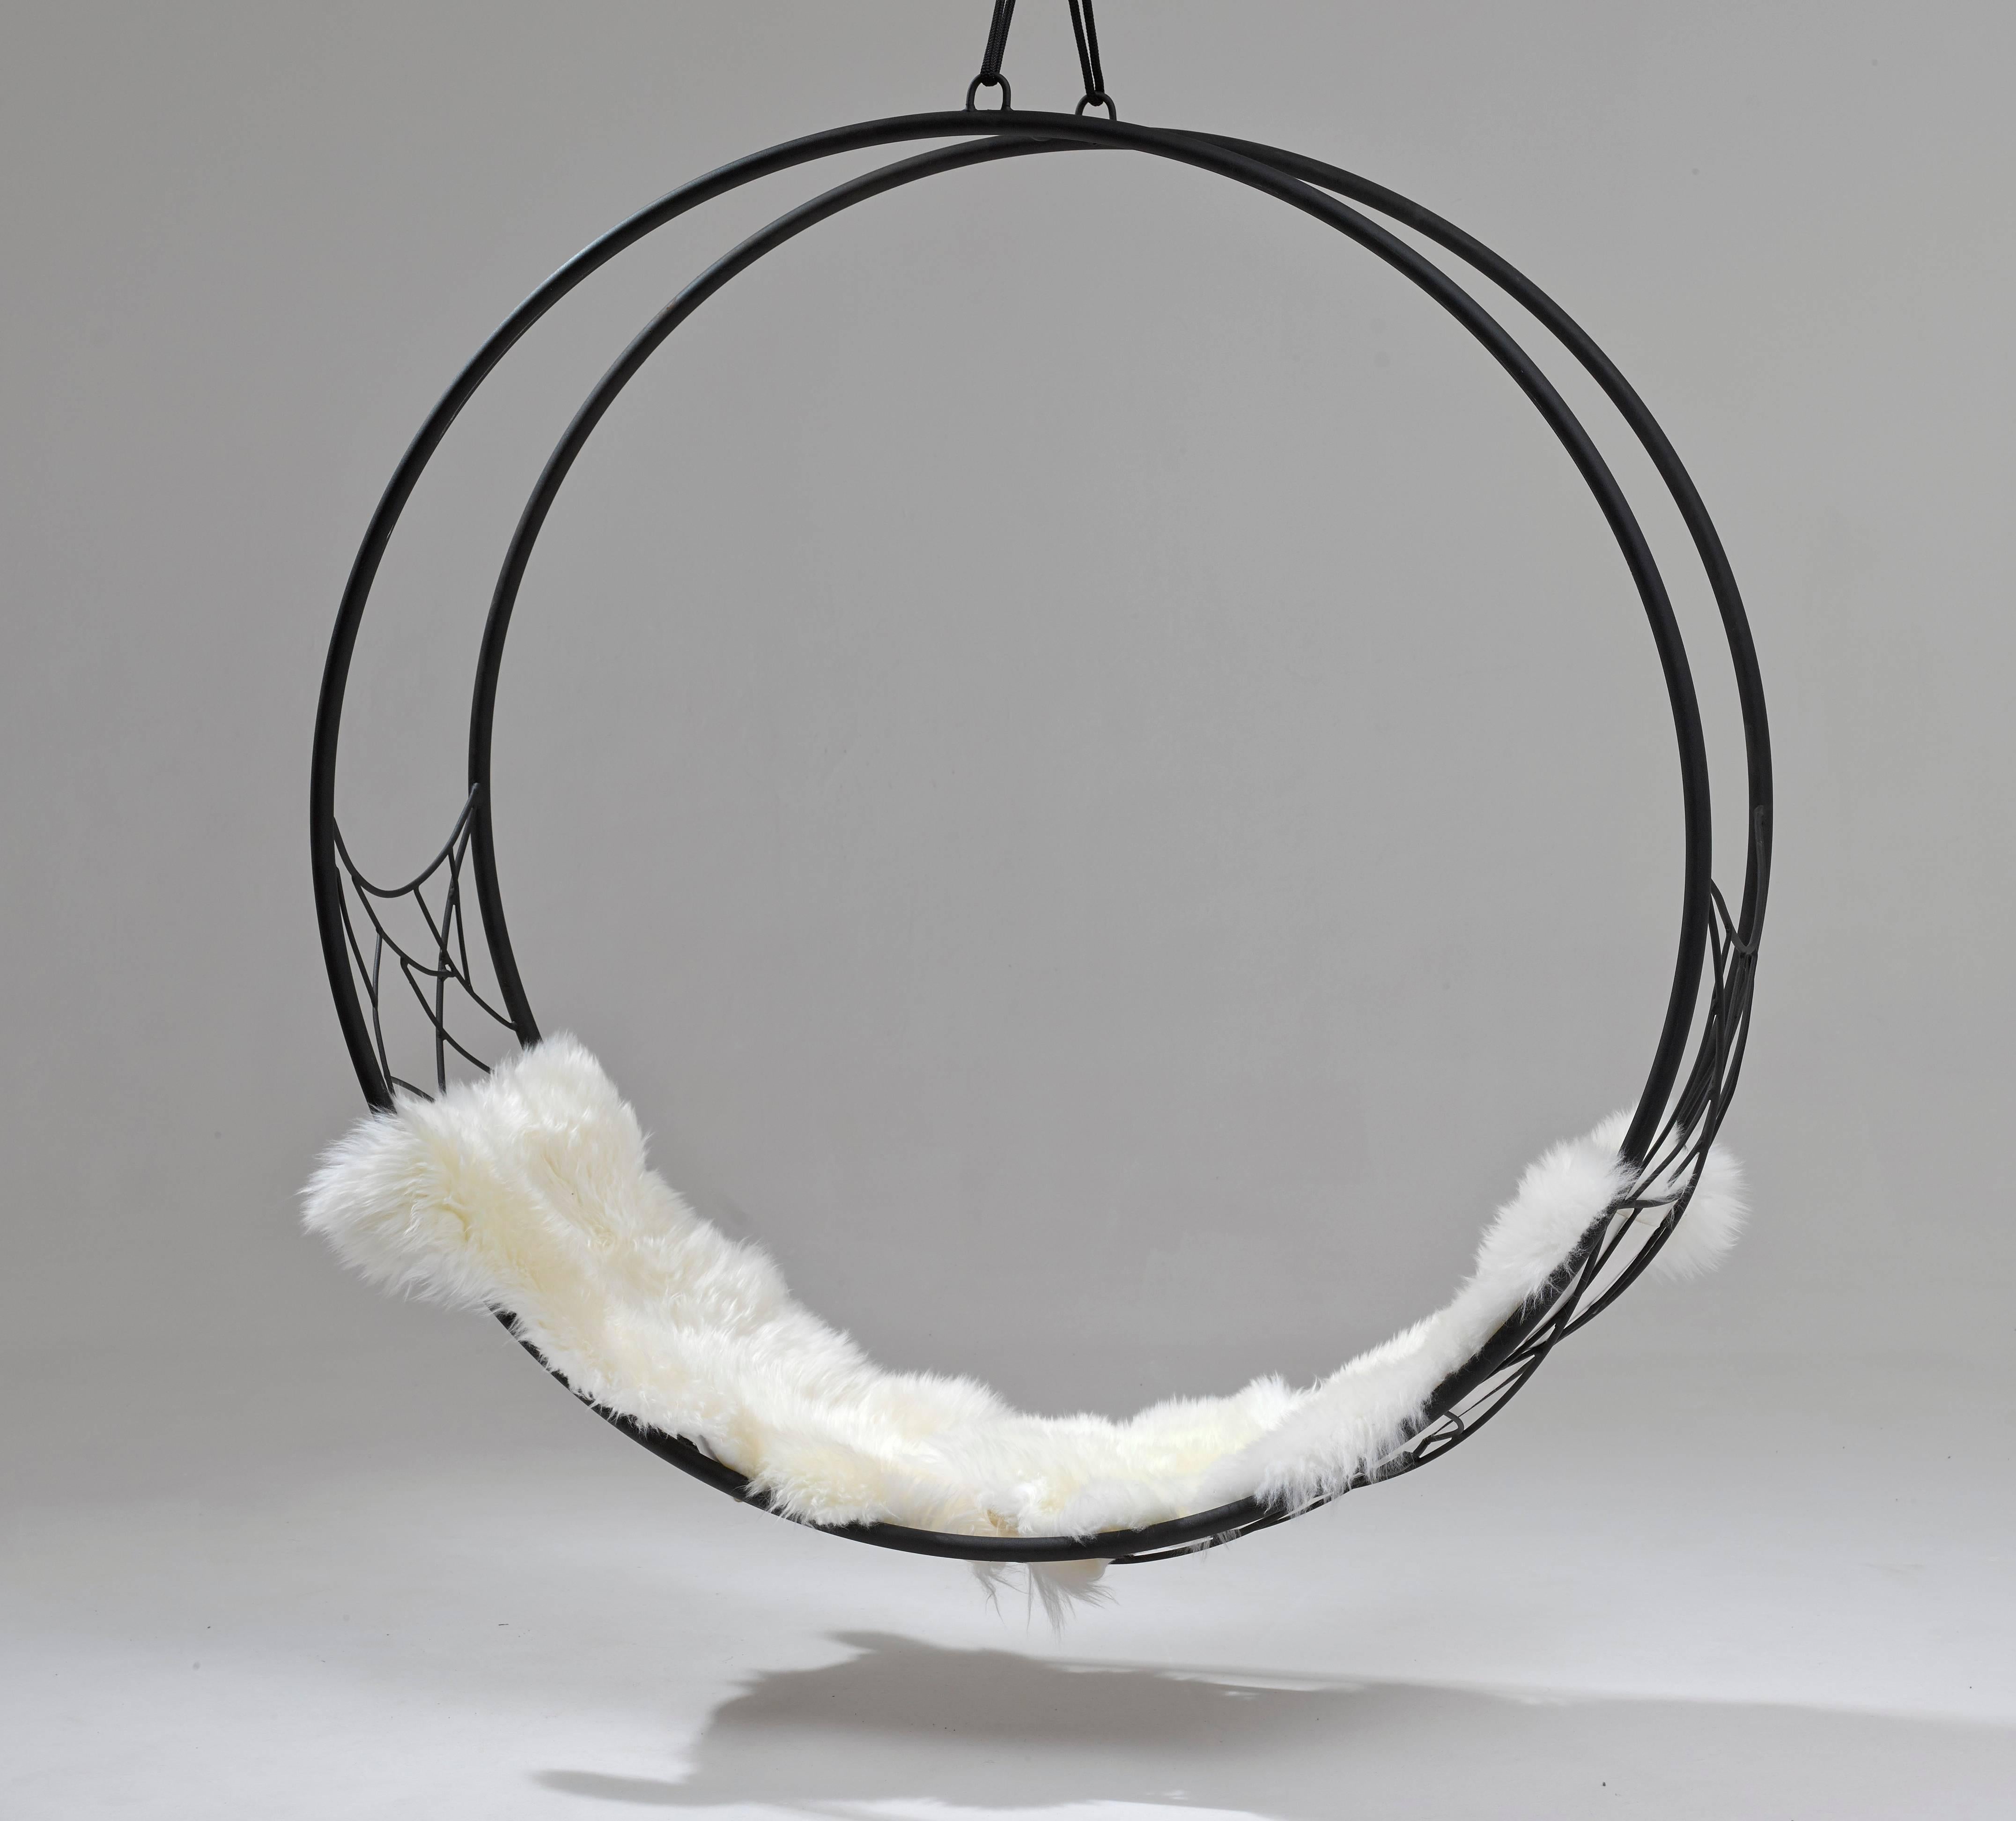 Welded Modern Circular Steel Wheel Hanging Chair For Sale